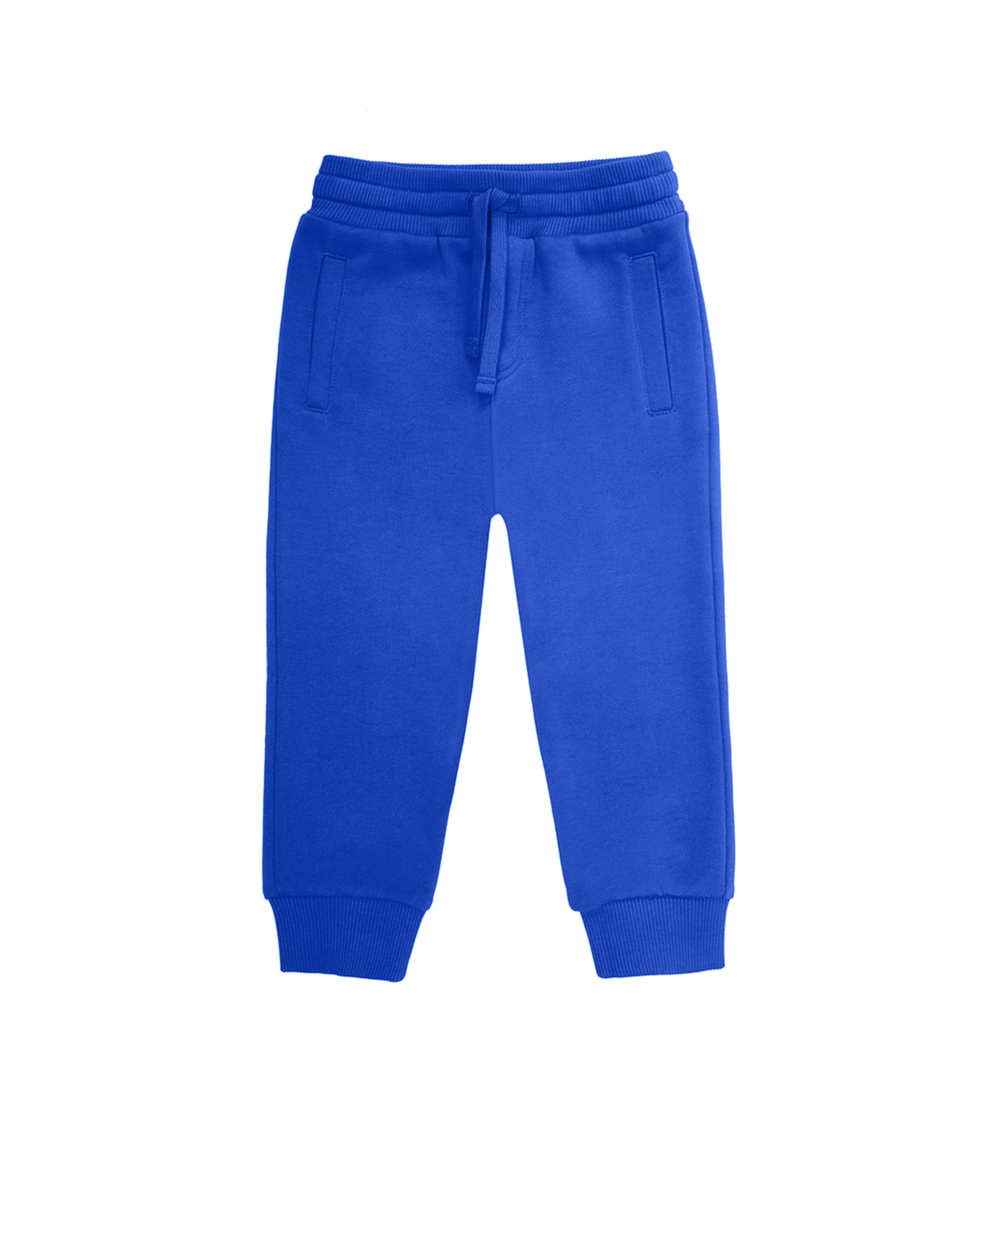 Спортивные брюки Dolce&Gabbana Kids L5JP7N-G7AZW-S, синий цвет • Купить в интернет-магазине Kameron